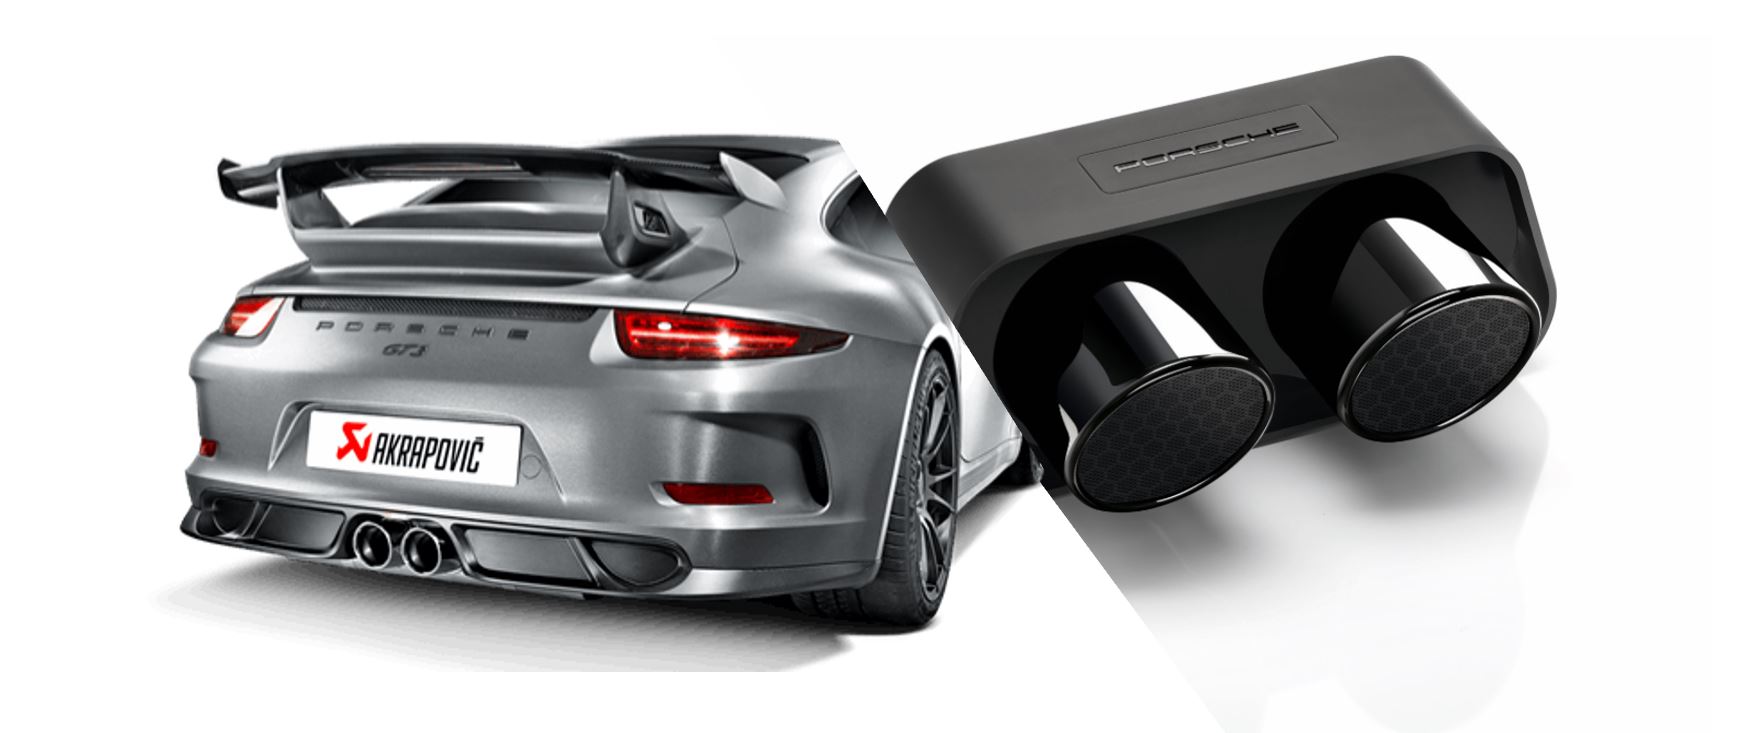 Canton & Porsche Partner Up On New High-End Speaker – channelnews